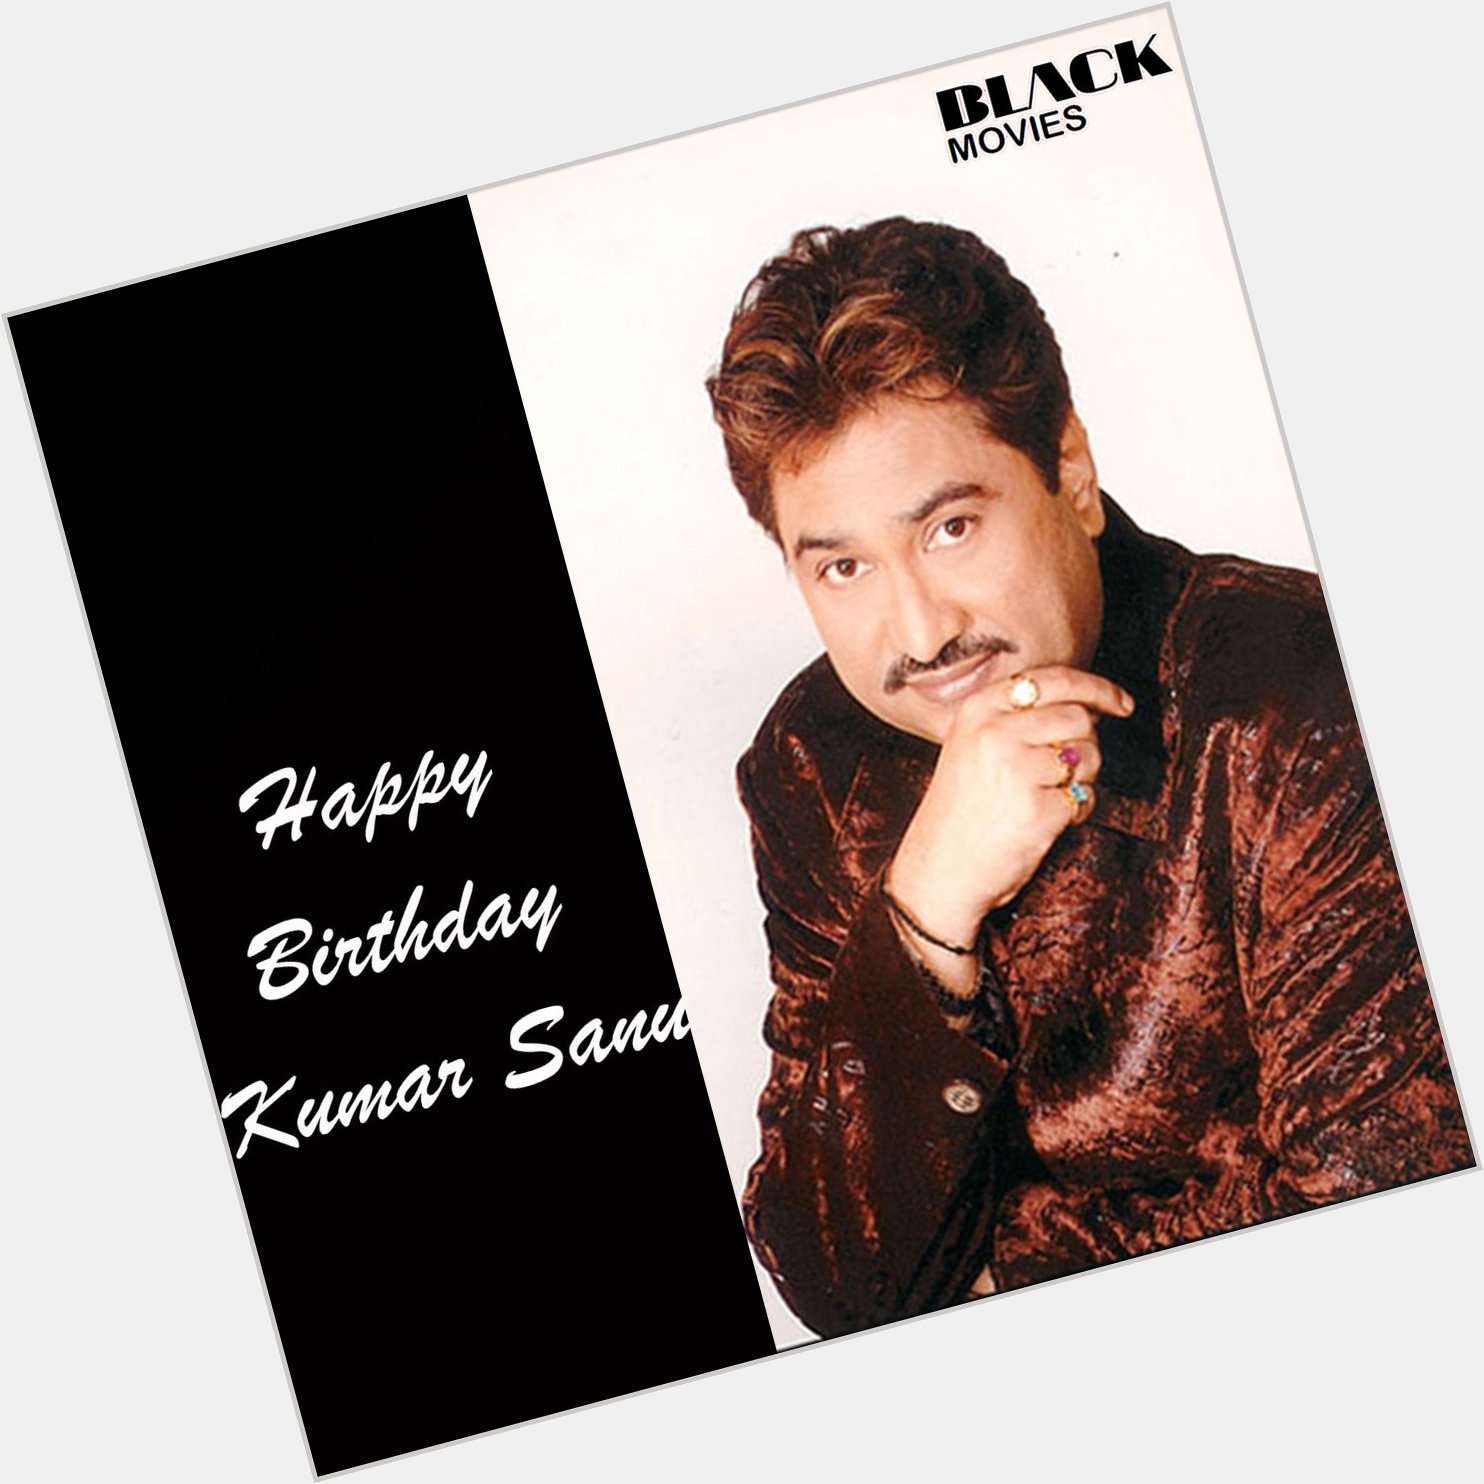 Wishing the golden voice of indian cinema, Singer Kumar Sanu, A very Happy Birthday  